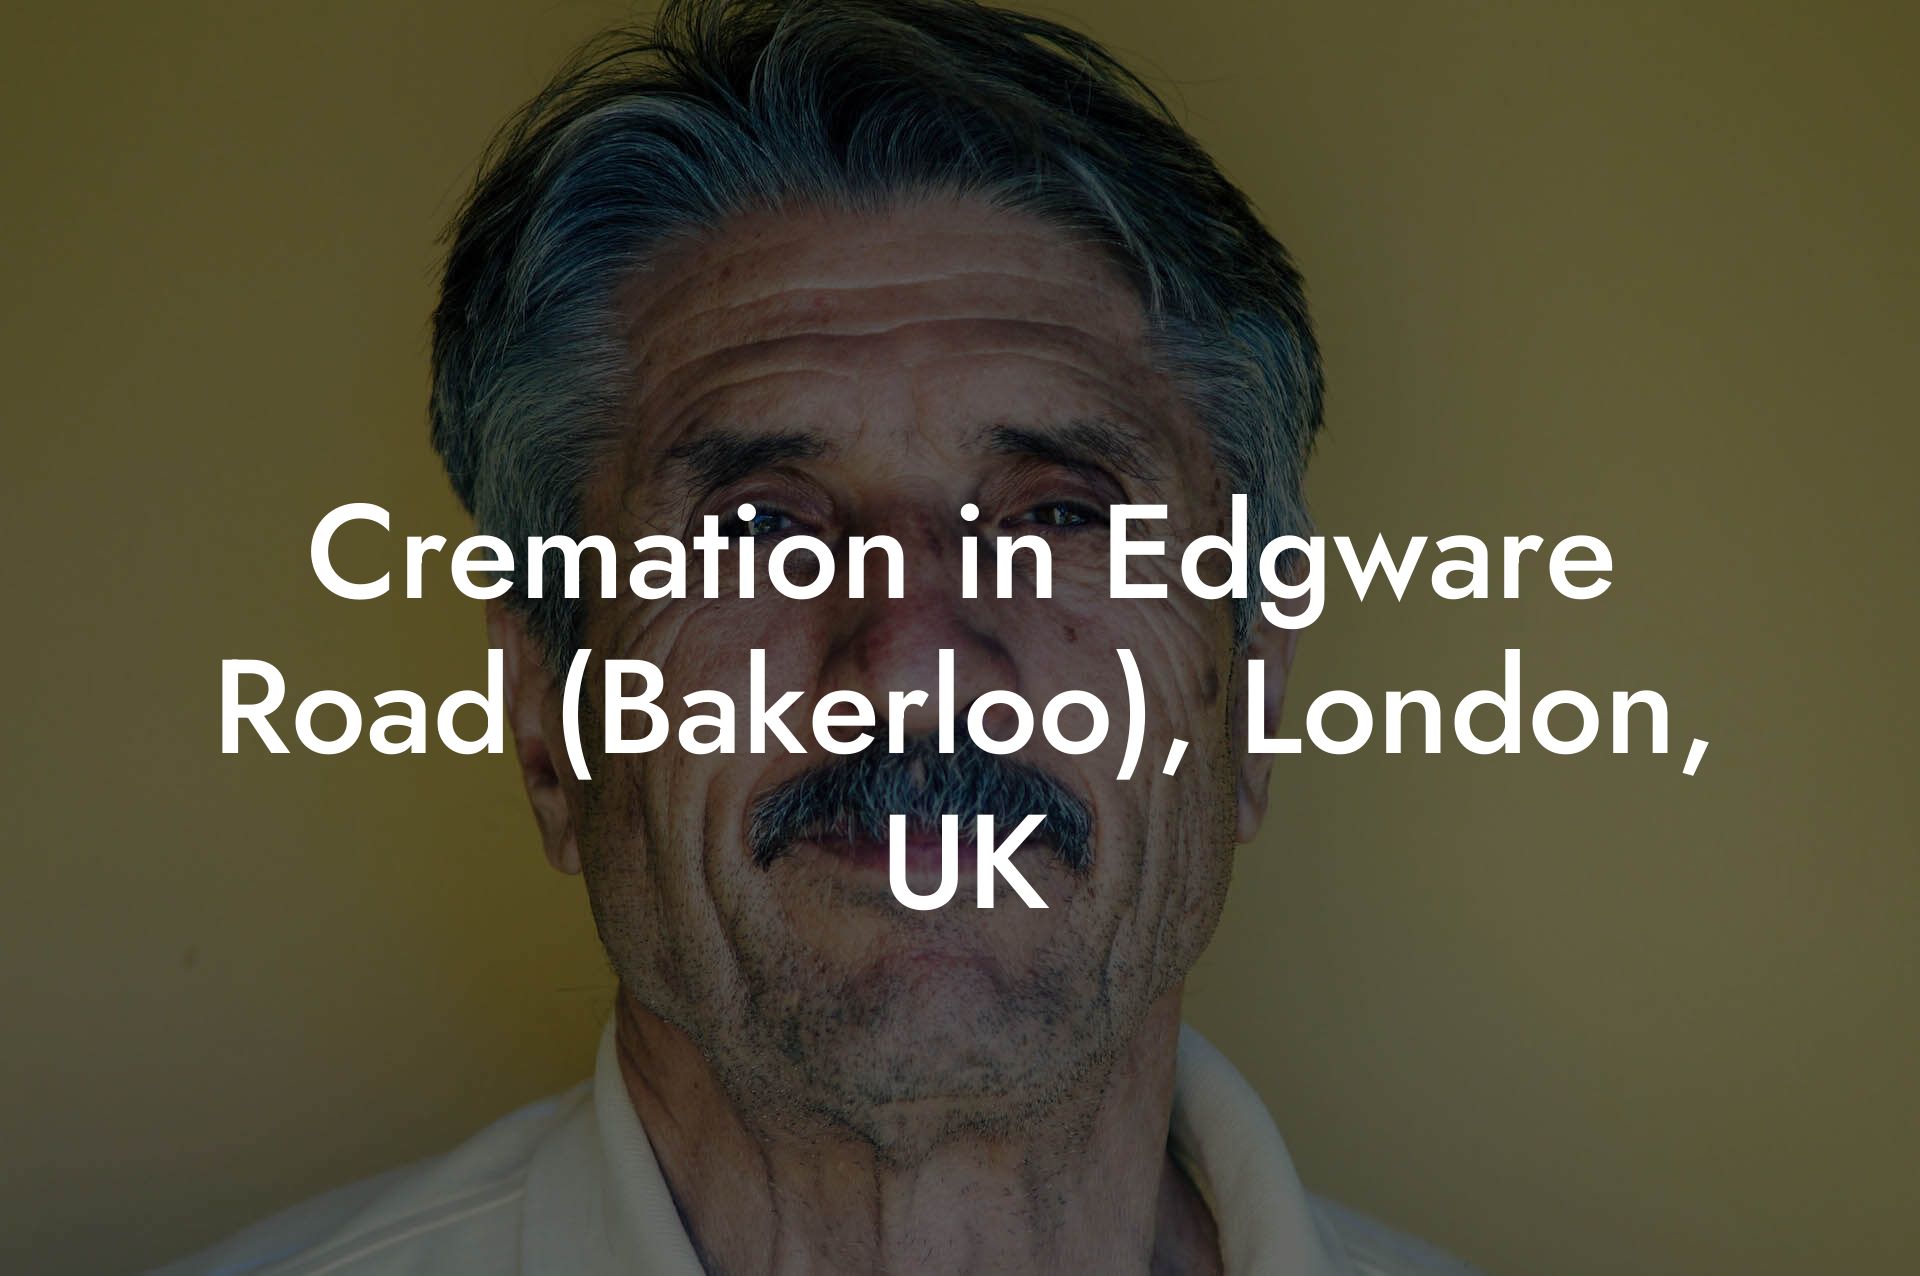 Cremation in Edgware Road (Bakerloo), London, UK